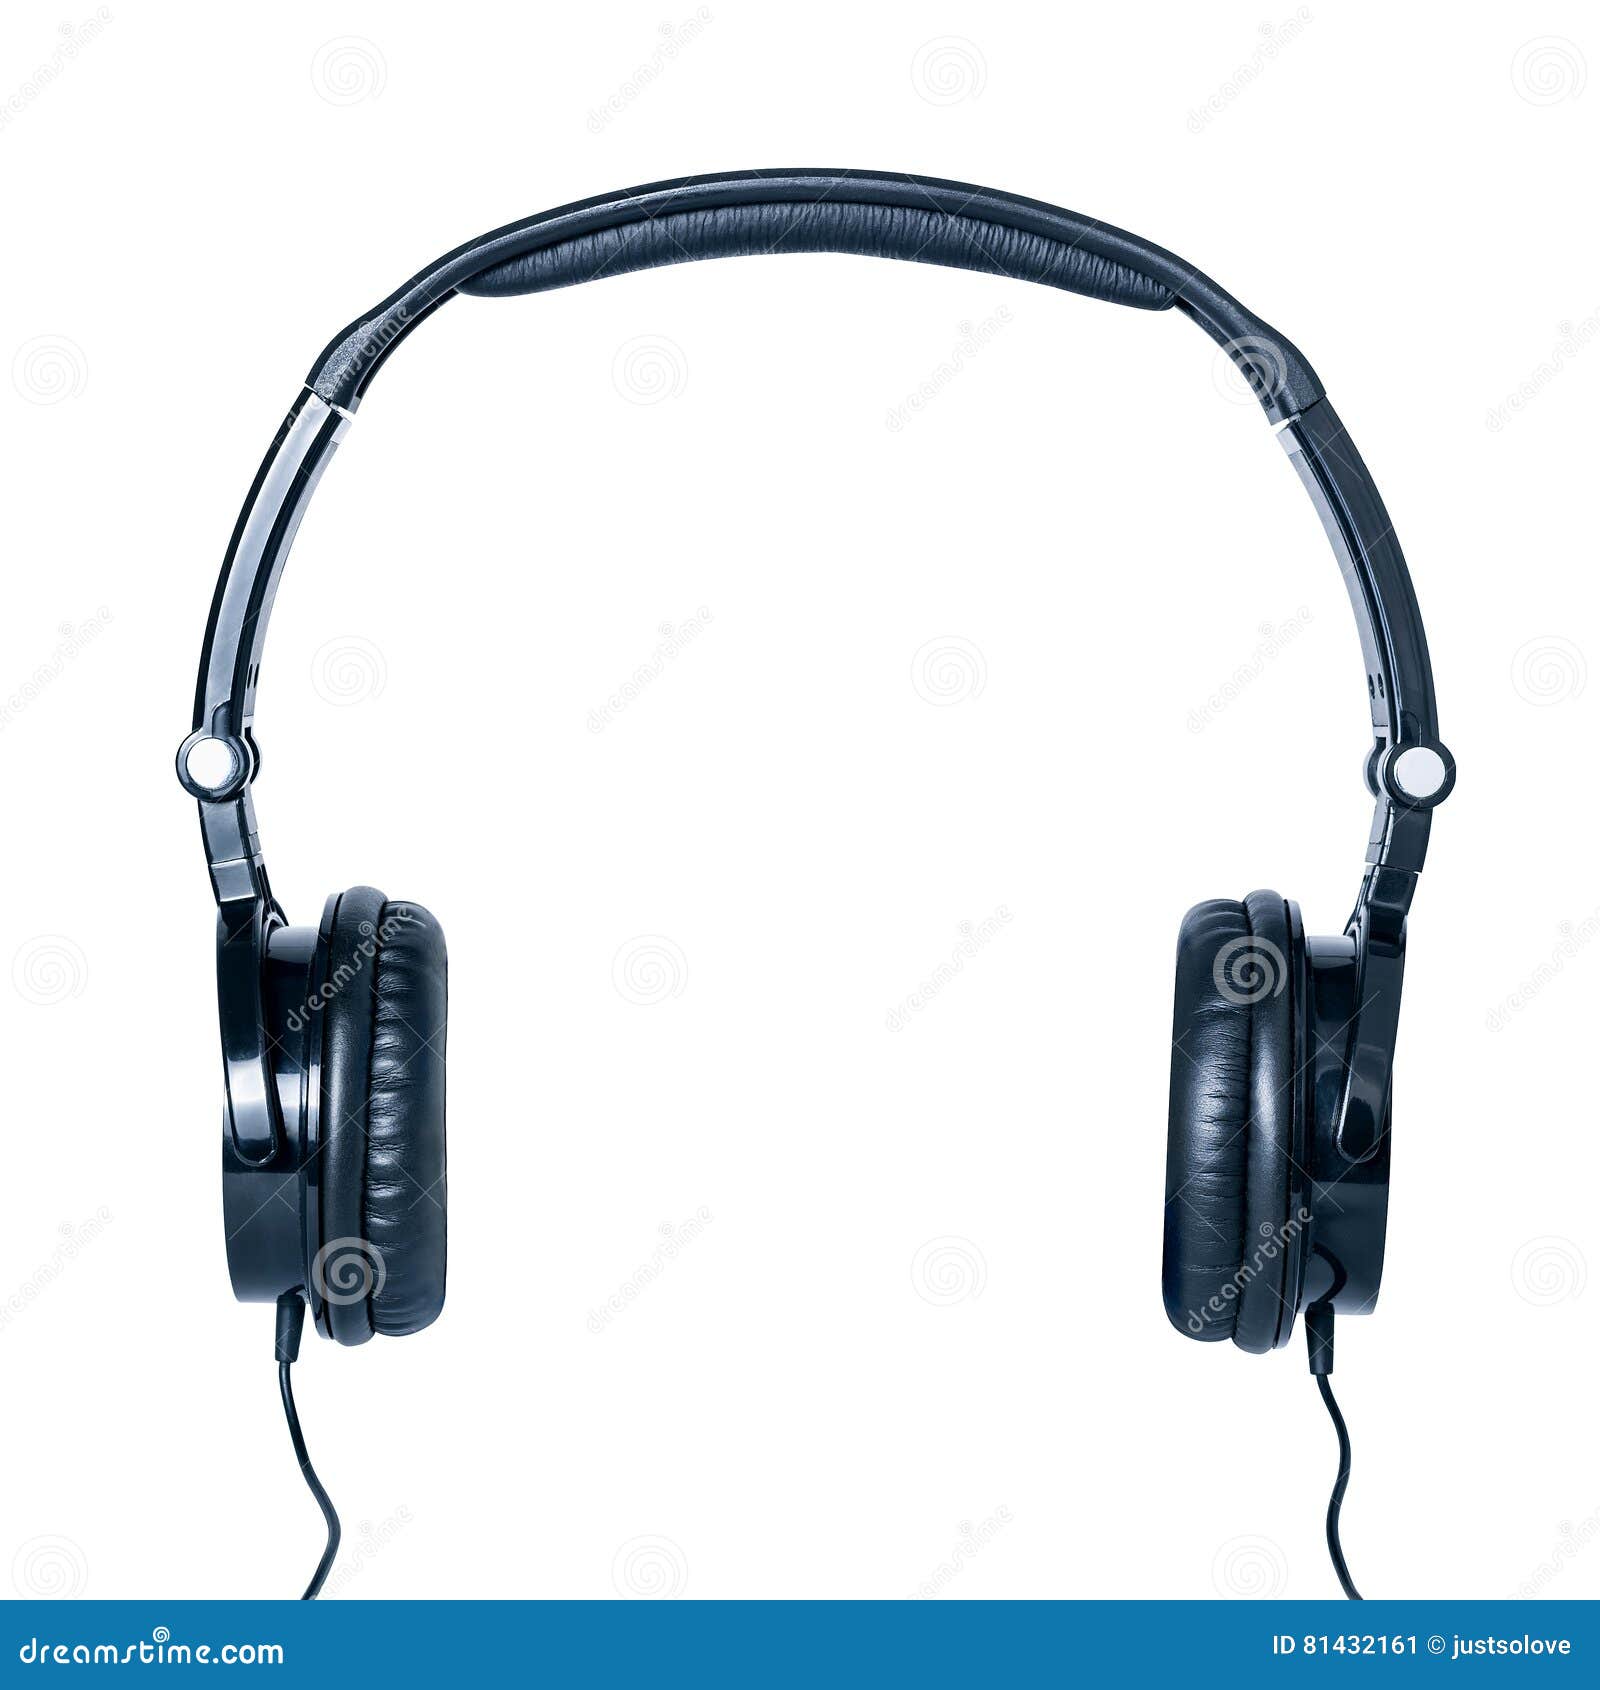 Headphones Isolated on White Background Stock Image - Image of leisure ...